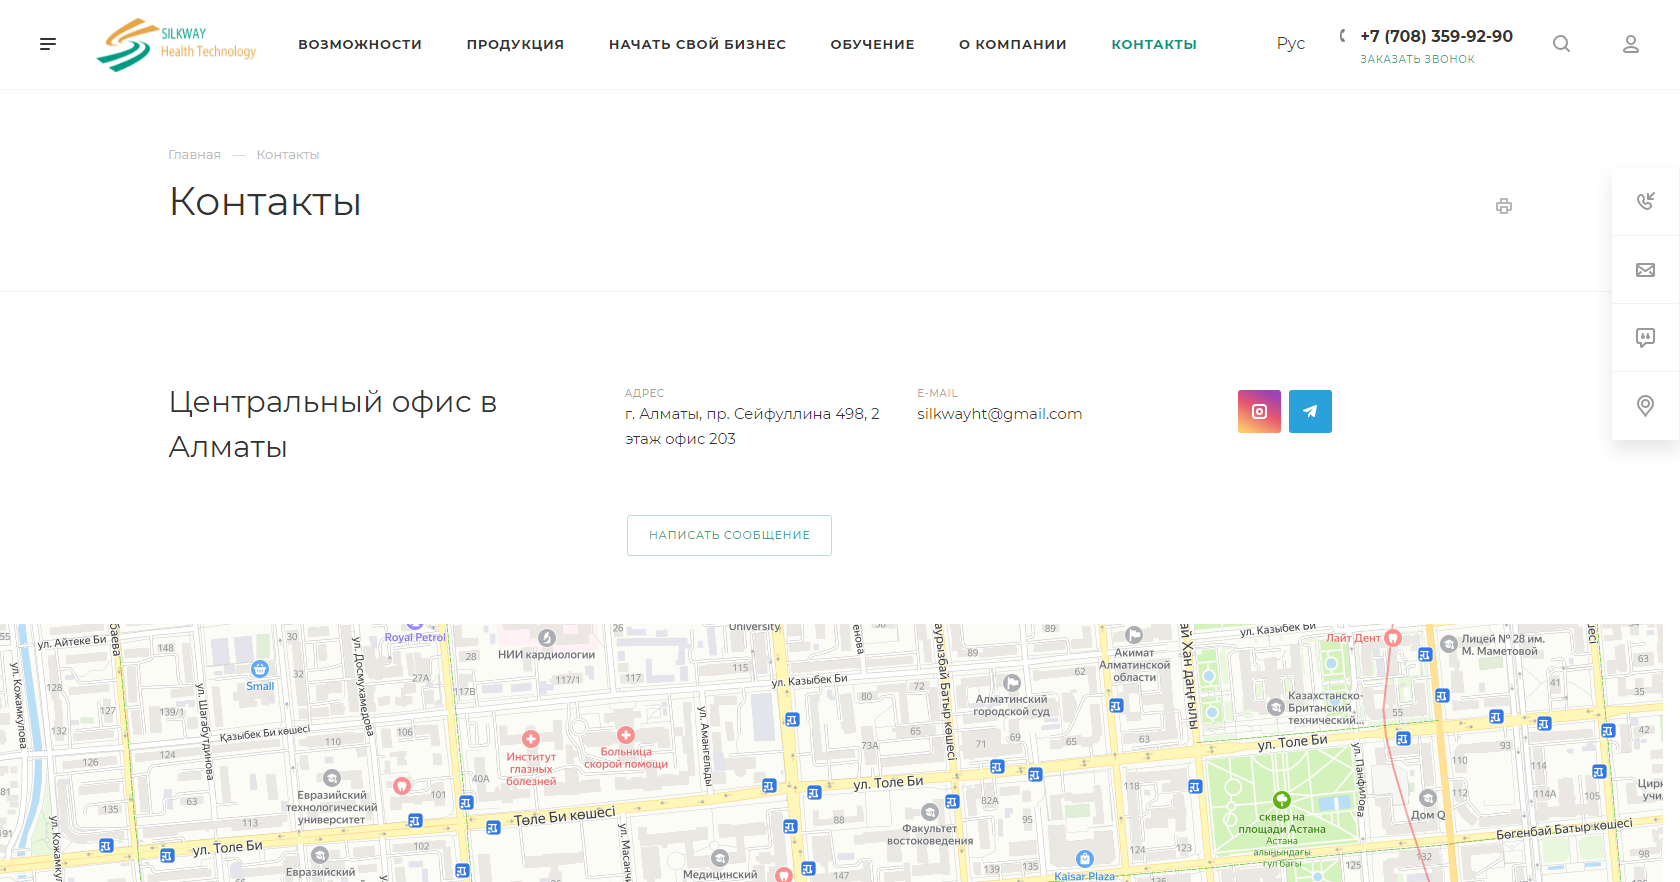 сайт компании «silkway health technology kazakhstan»